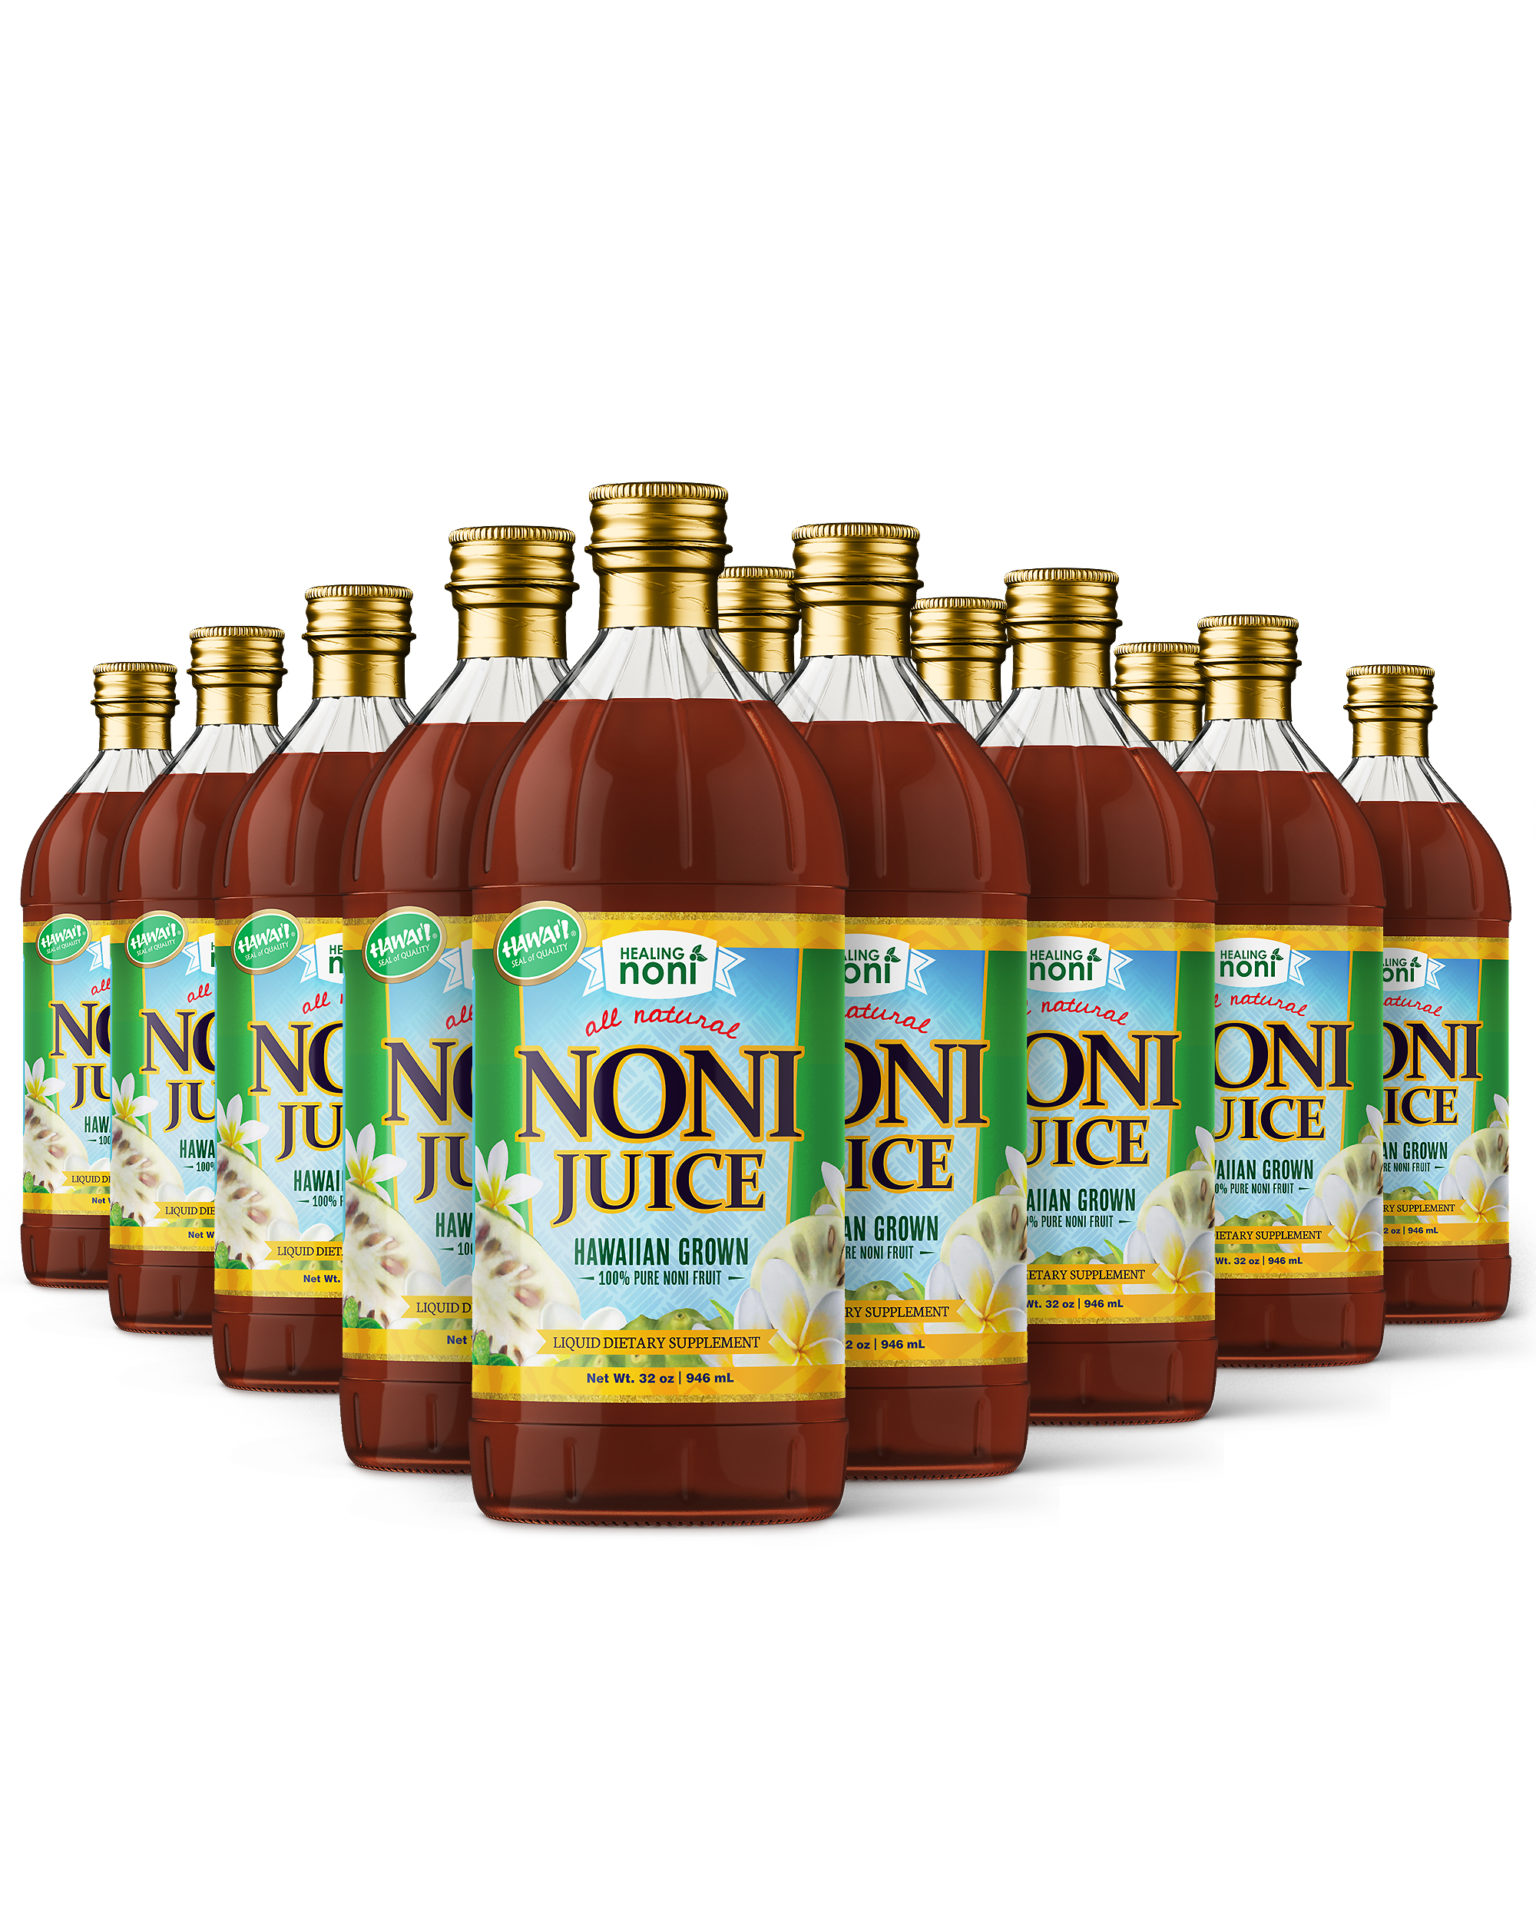 All natural Hawaiian grown Noni juice